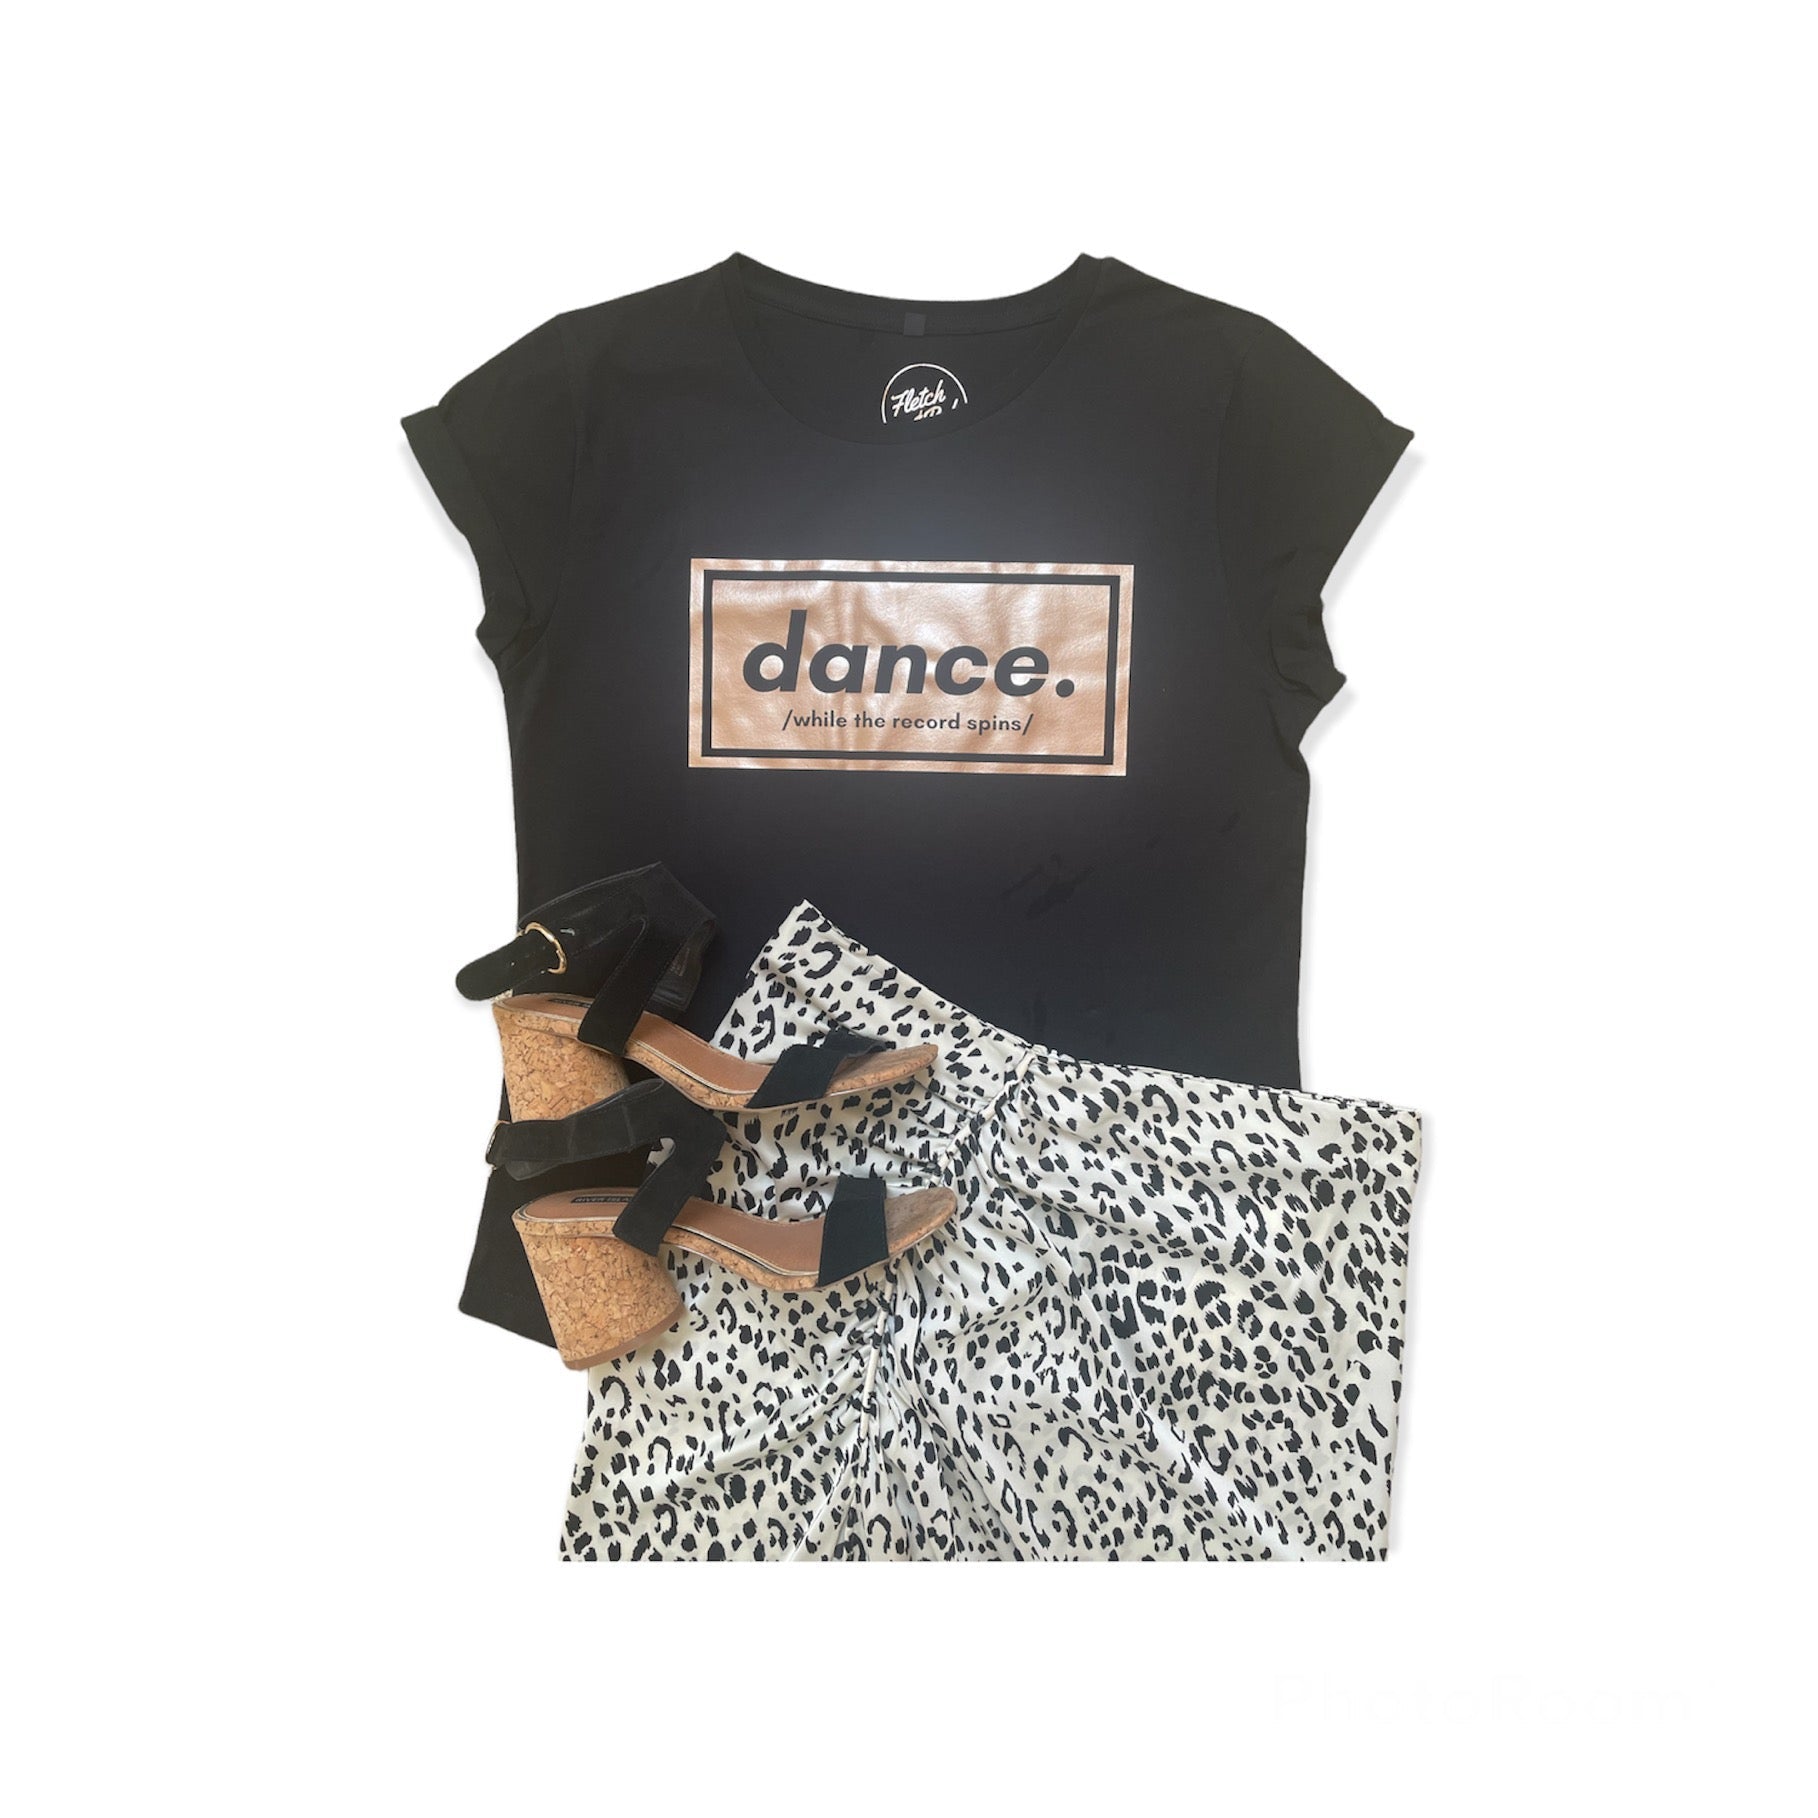 The Black Boxed Dance Ladies T-Shirt